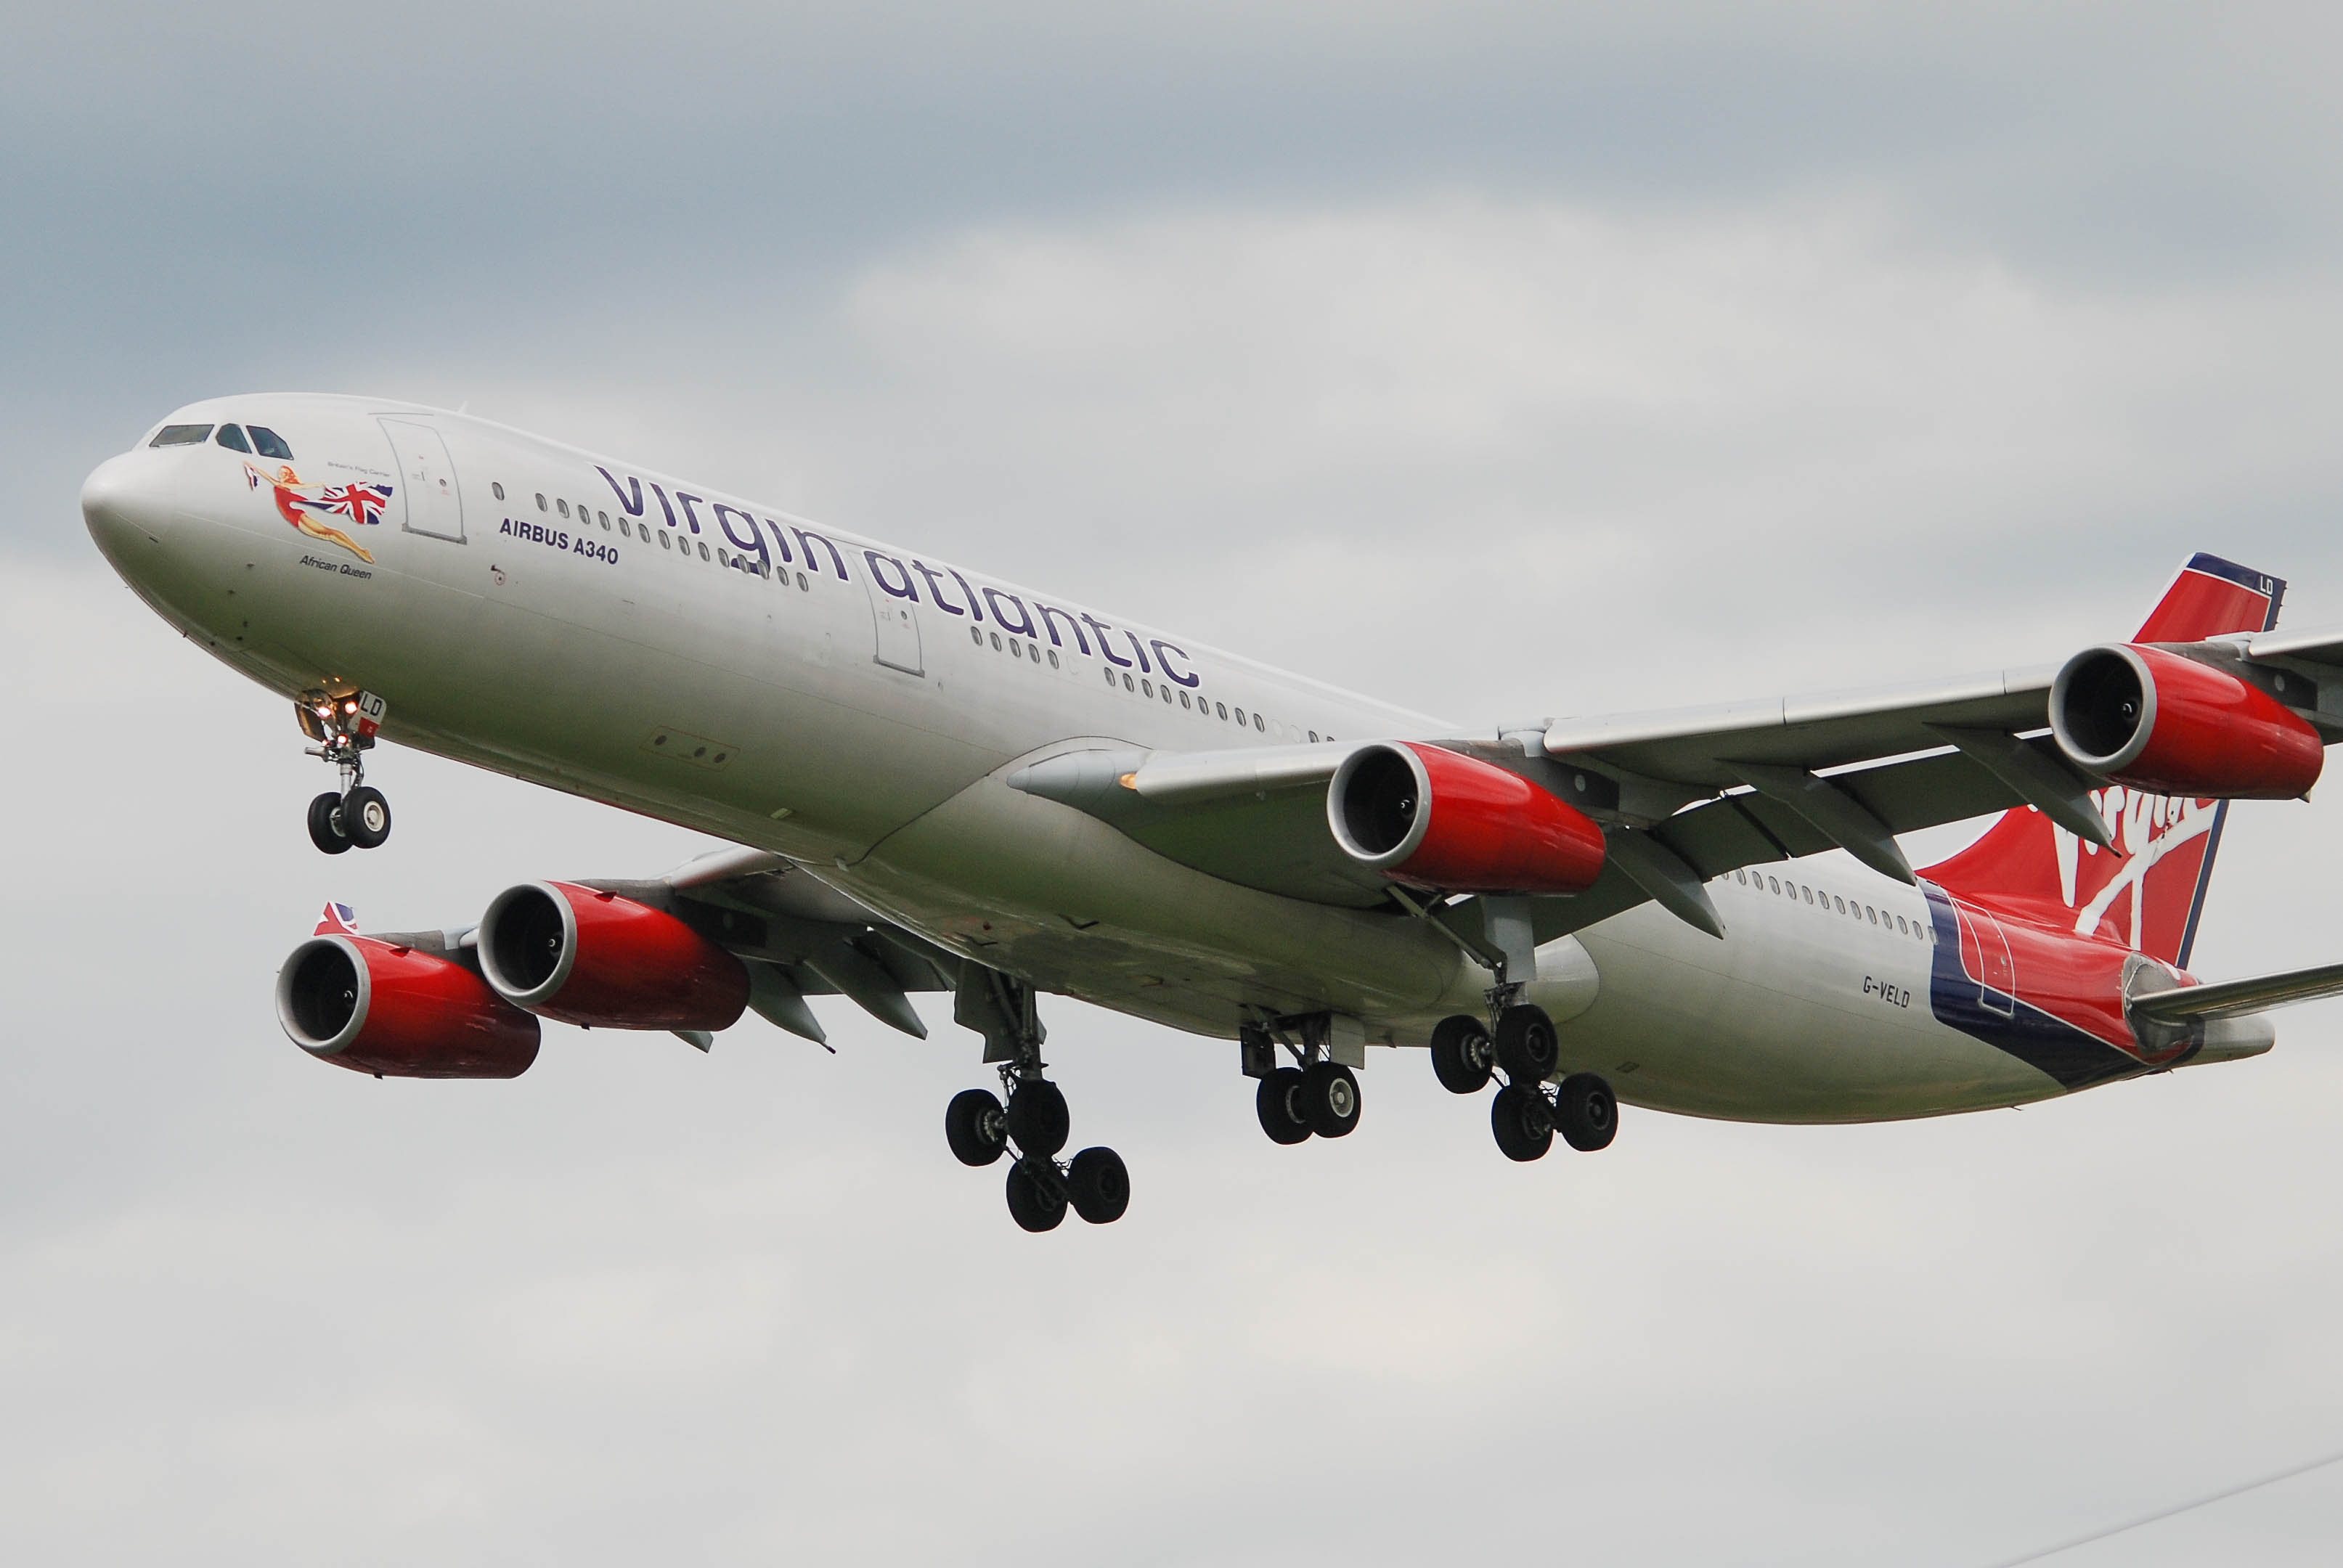 G-VELD/GVELD Virgin Atlantic Airways Airbus A340 Airframe Information - AVSpotters.com